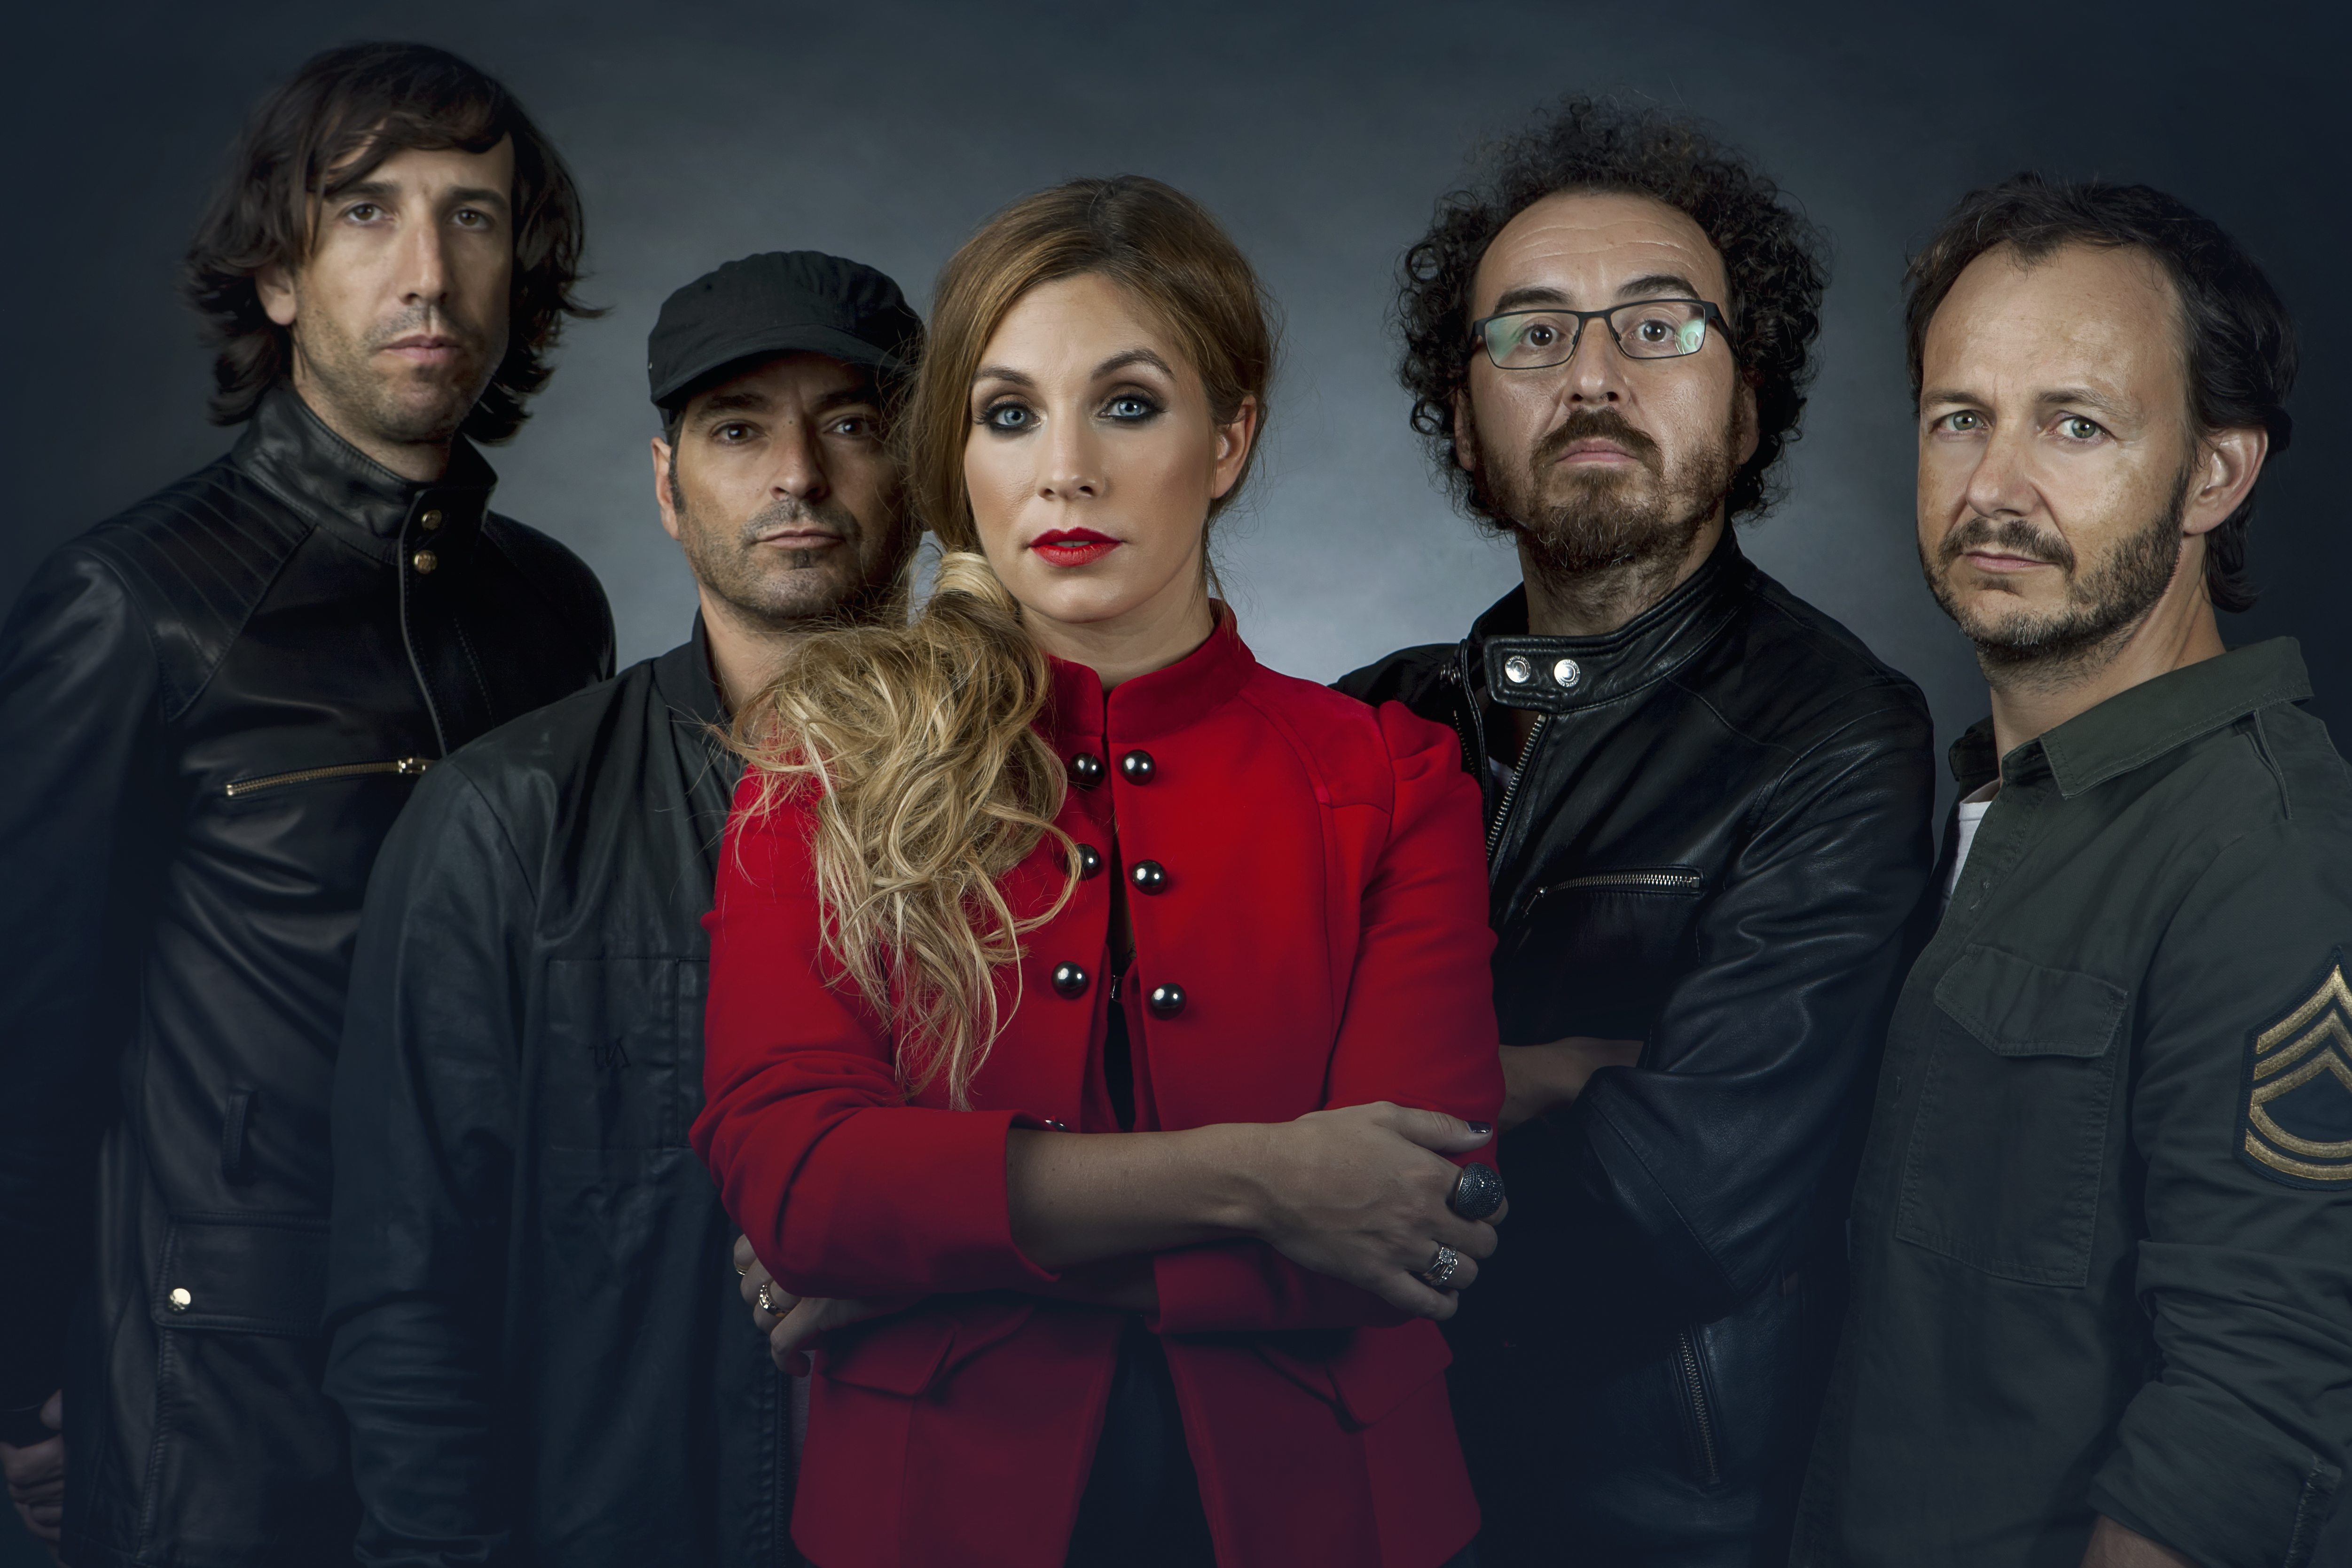 La Oreja de Van Gogh returns to rock their new album in Medellin